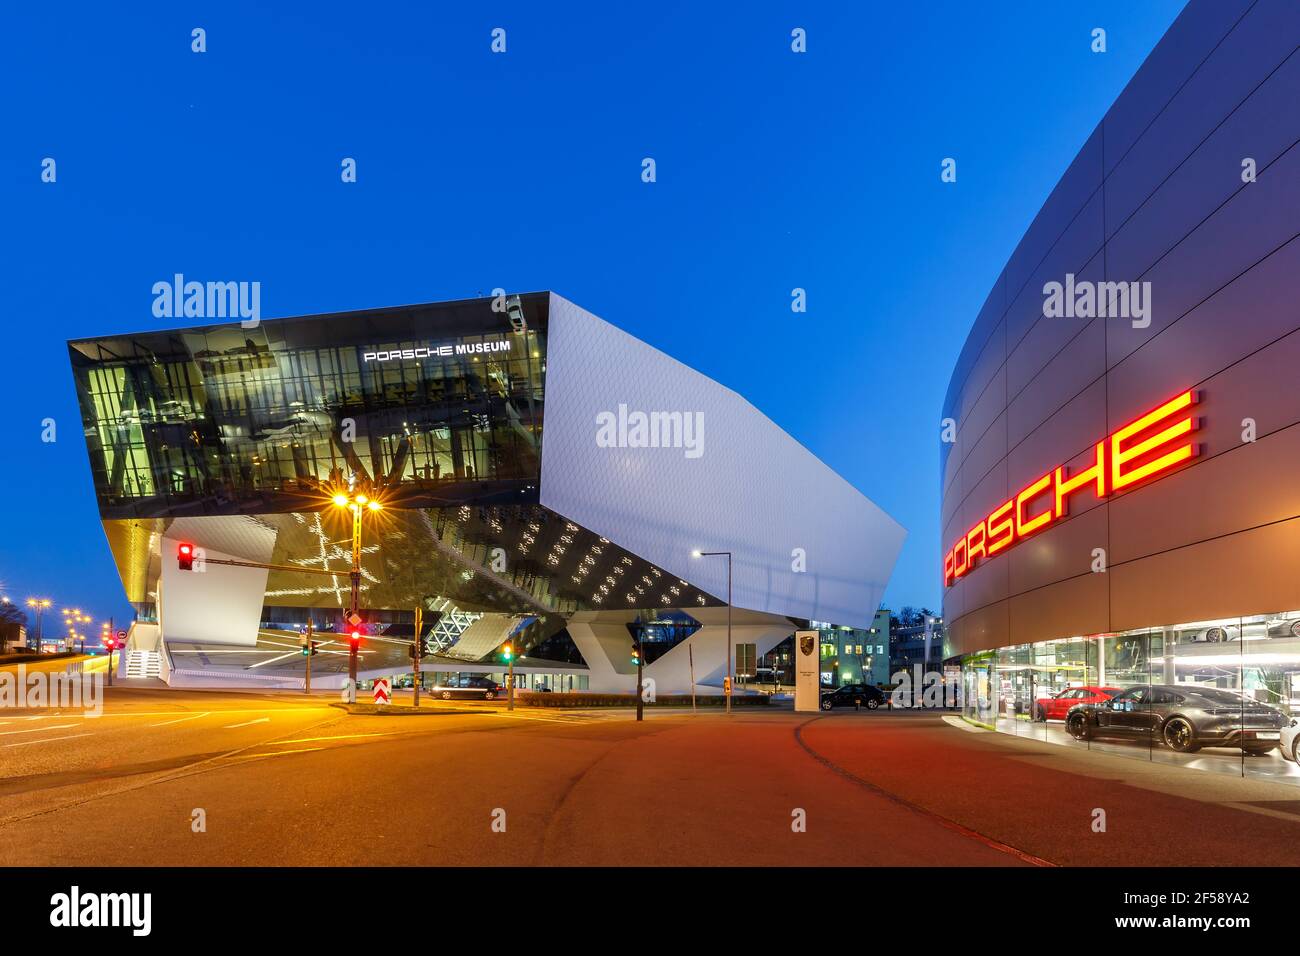 Stuttgart, Germany - March 2, 2021: Porsche museum headquarters headquarter art architecture in Stuttgart, Germany. Stock Photo